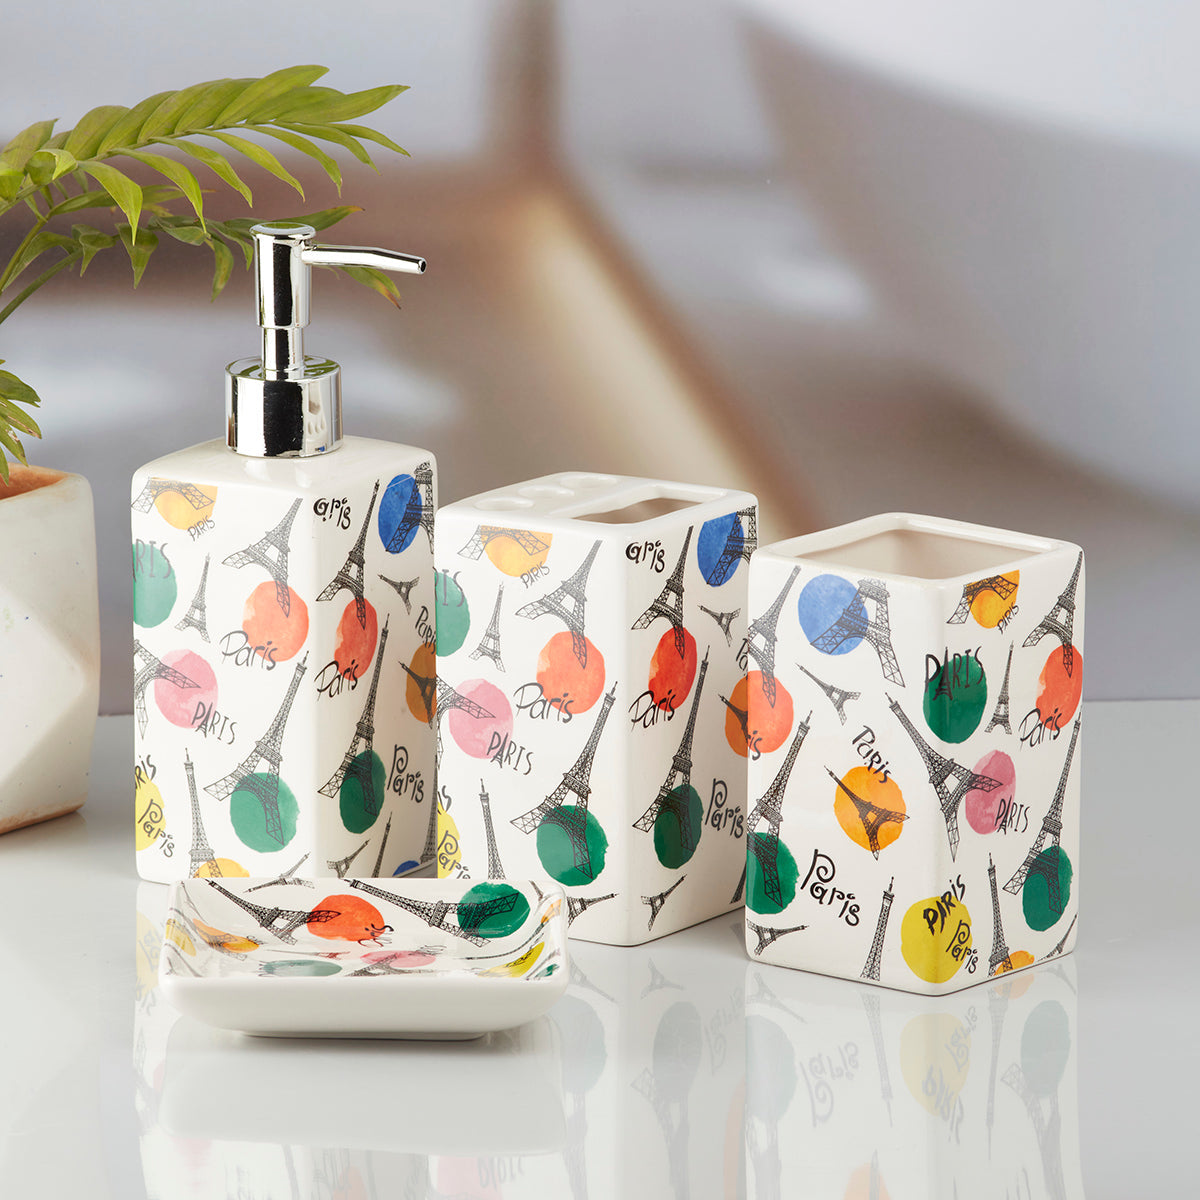 Ceramic Bathroom Accessories Set of 4 Bath Set with Soap Dispenser (10190)